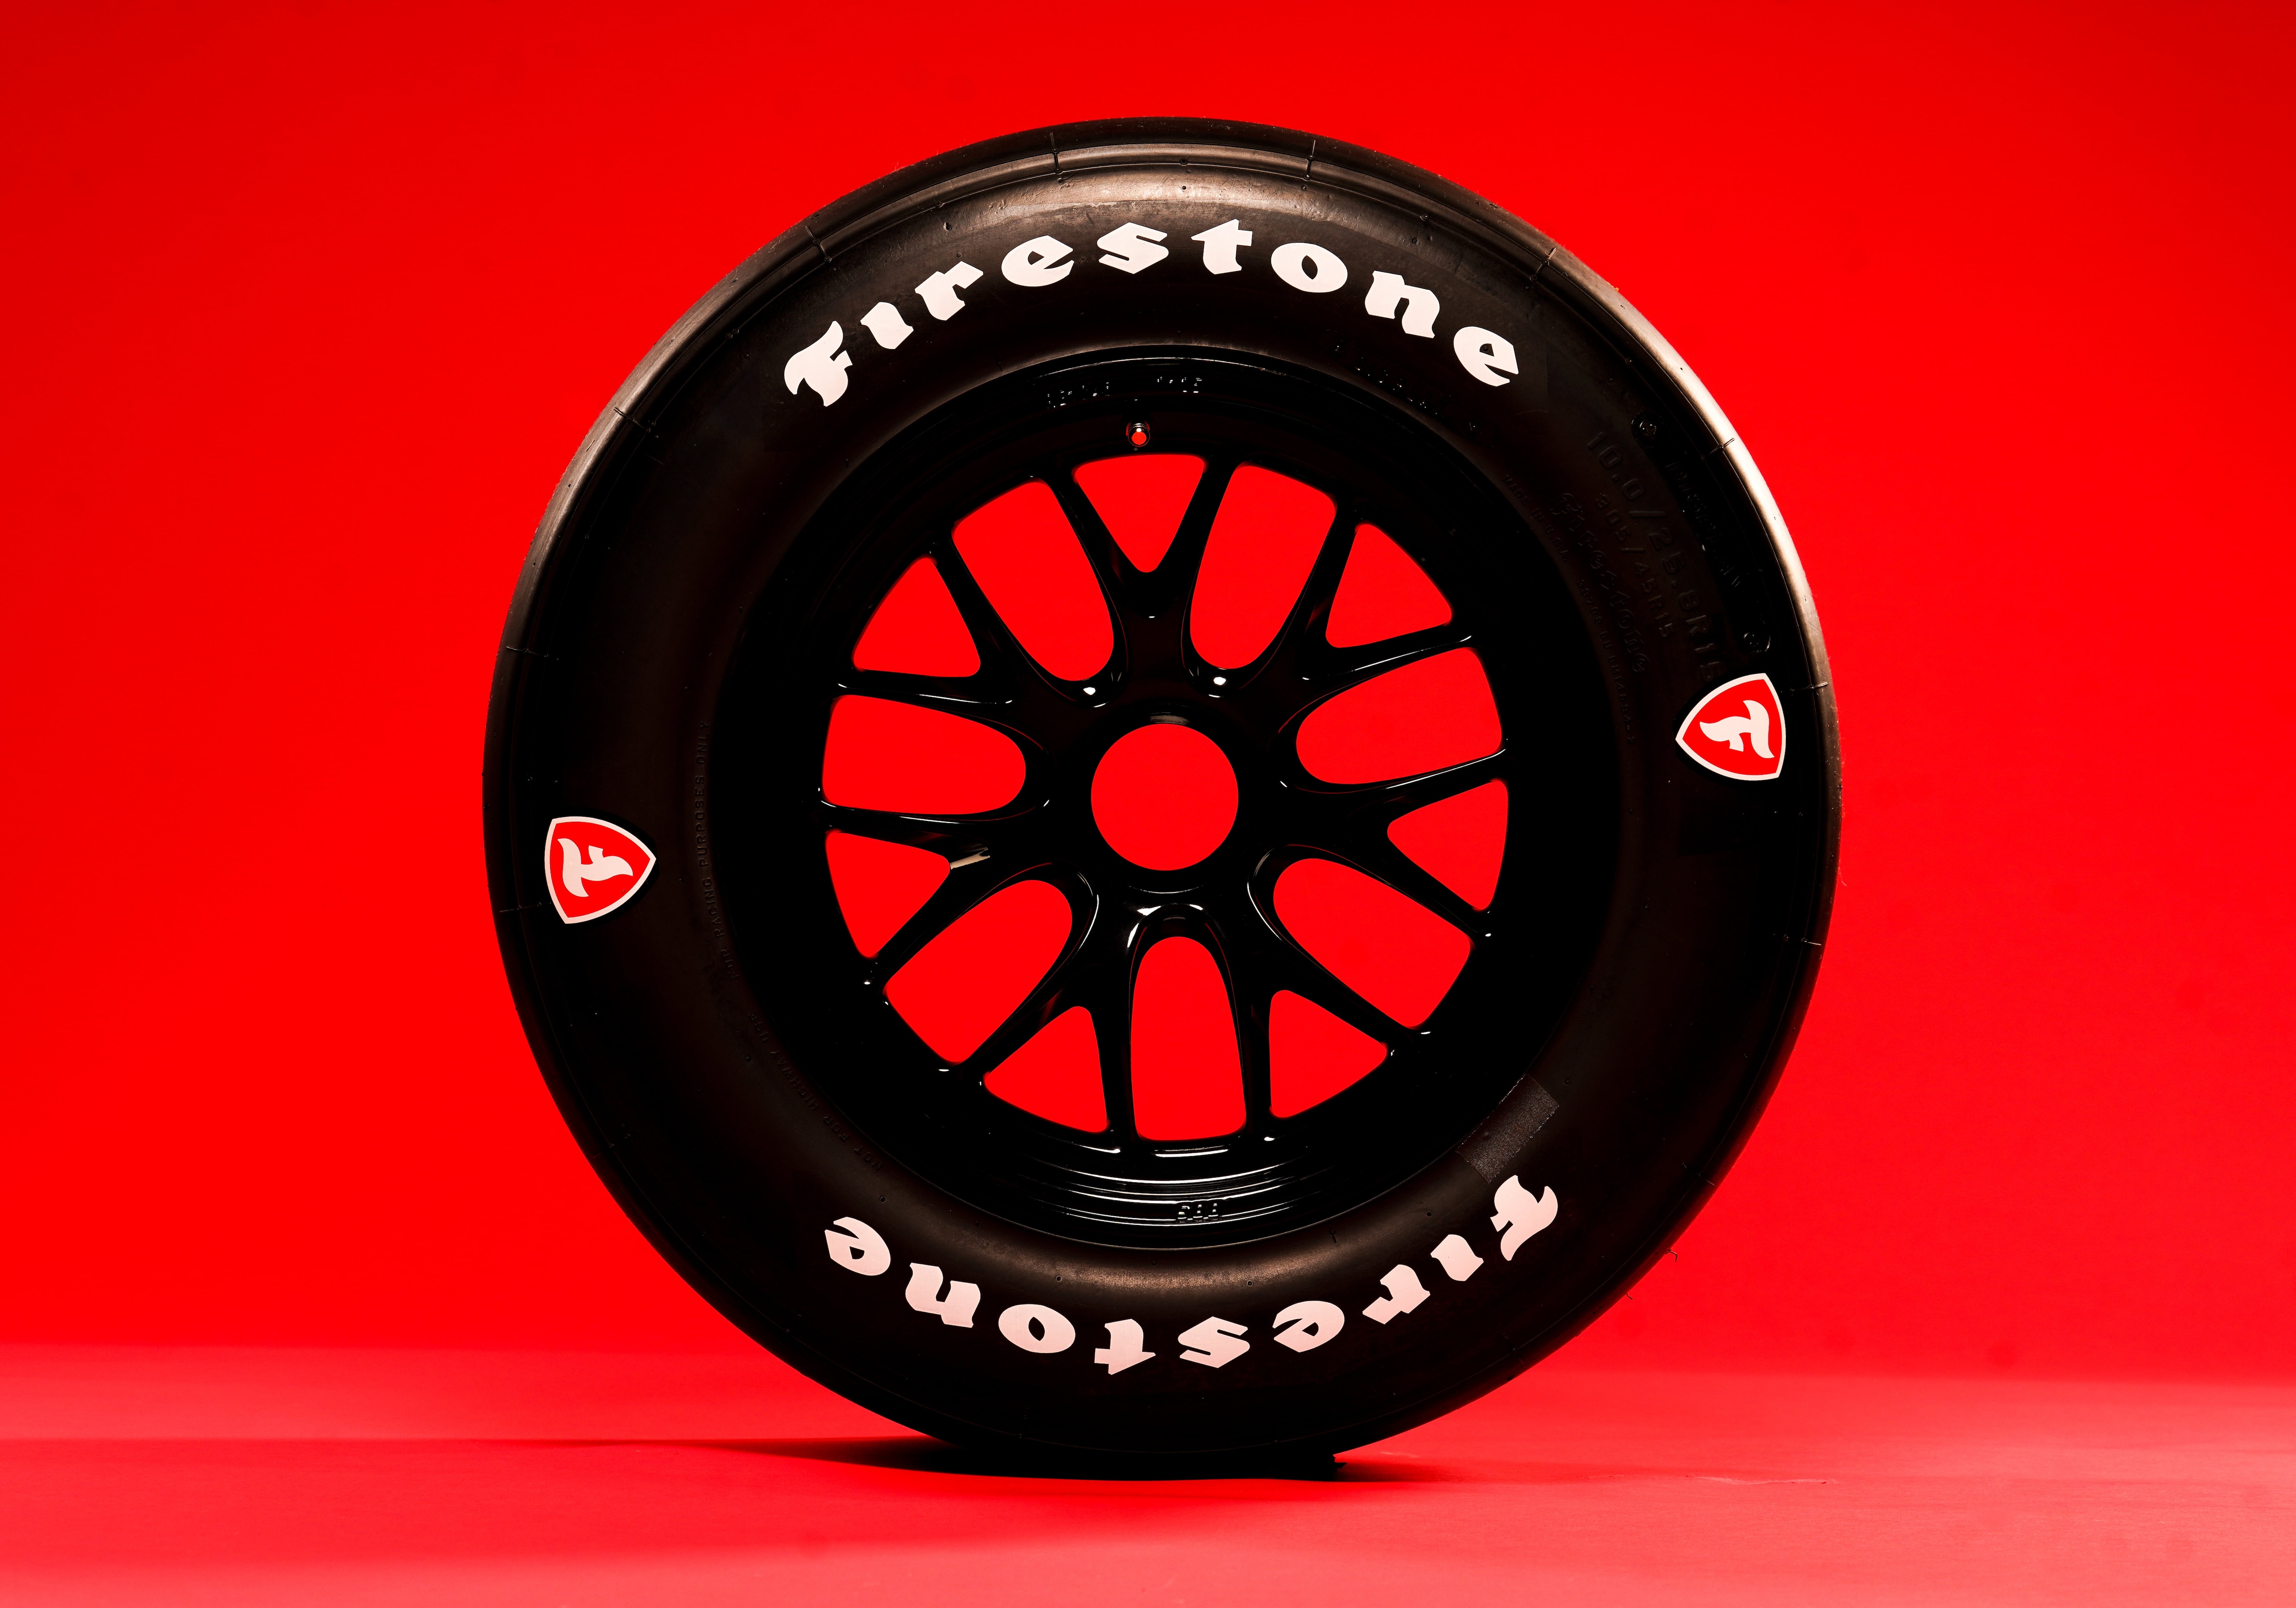 Firestone Indy Racing Tire for Iowa